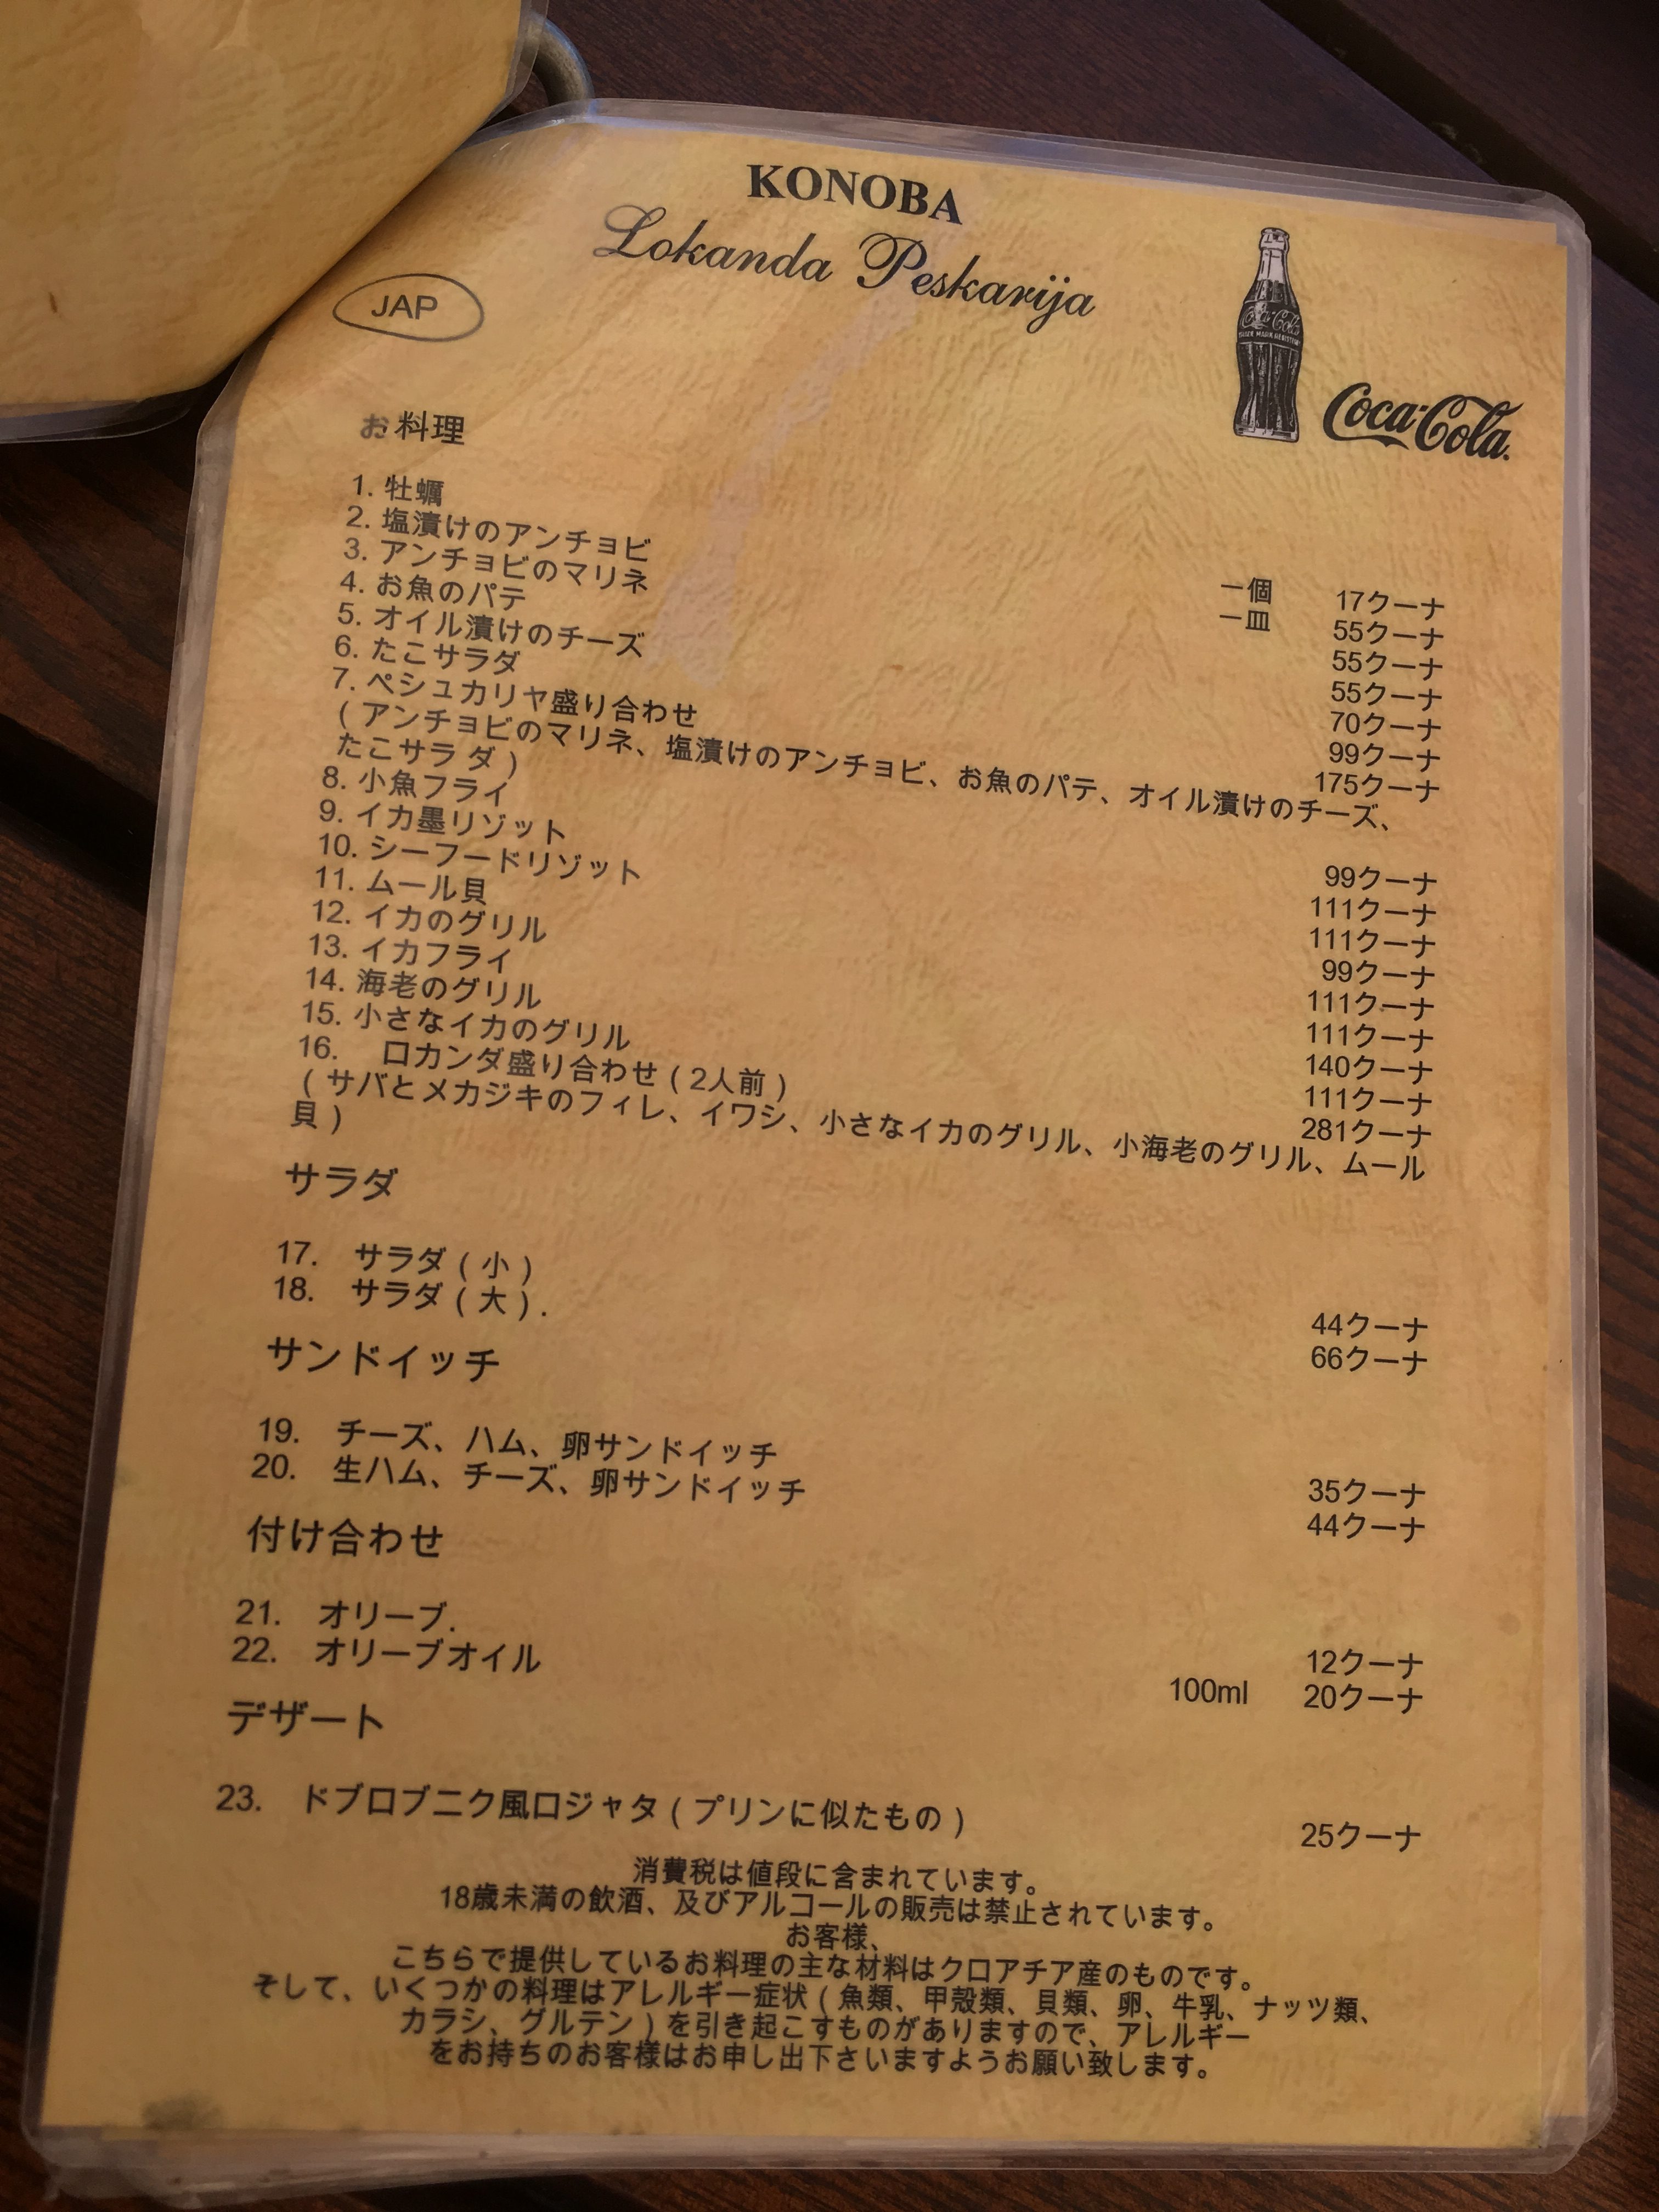 dubrovnik old city KONOBA japanese menu